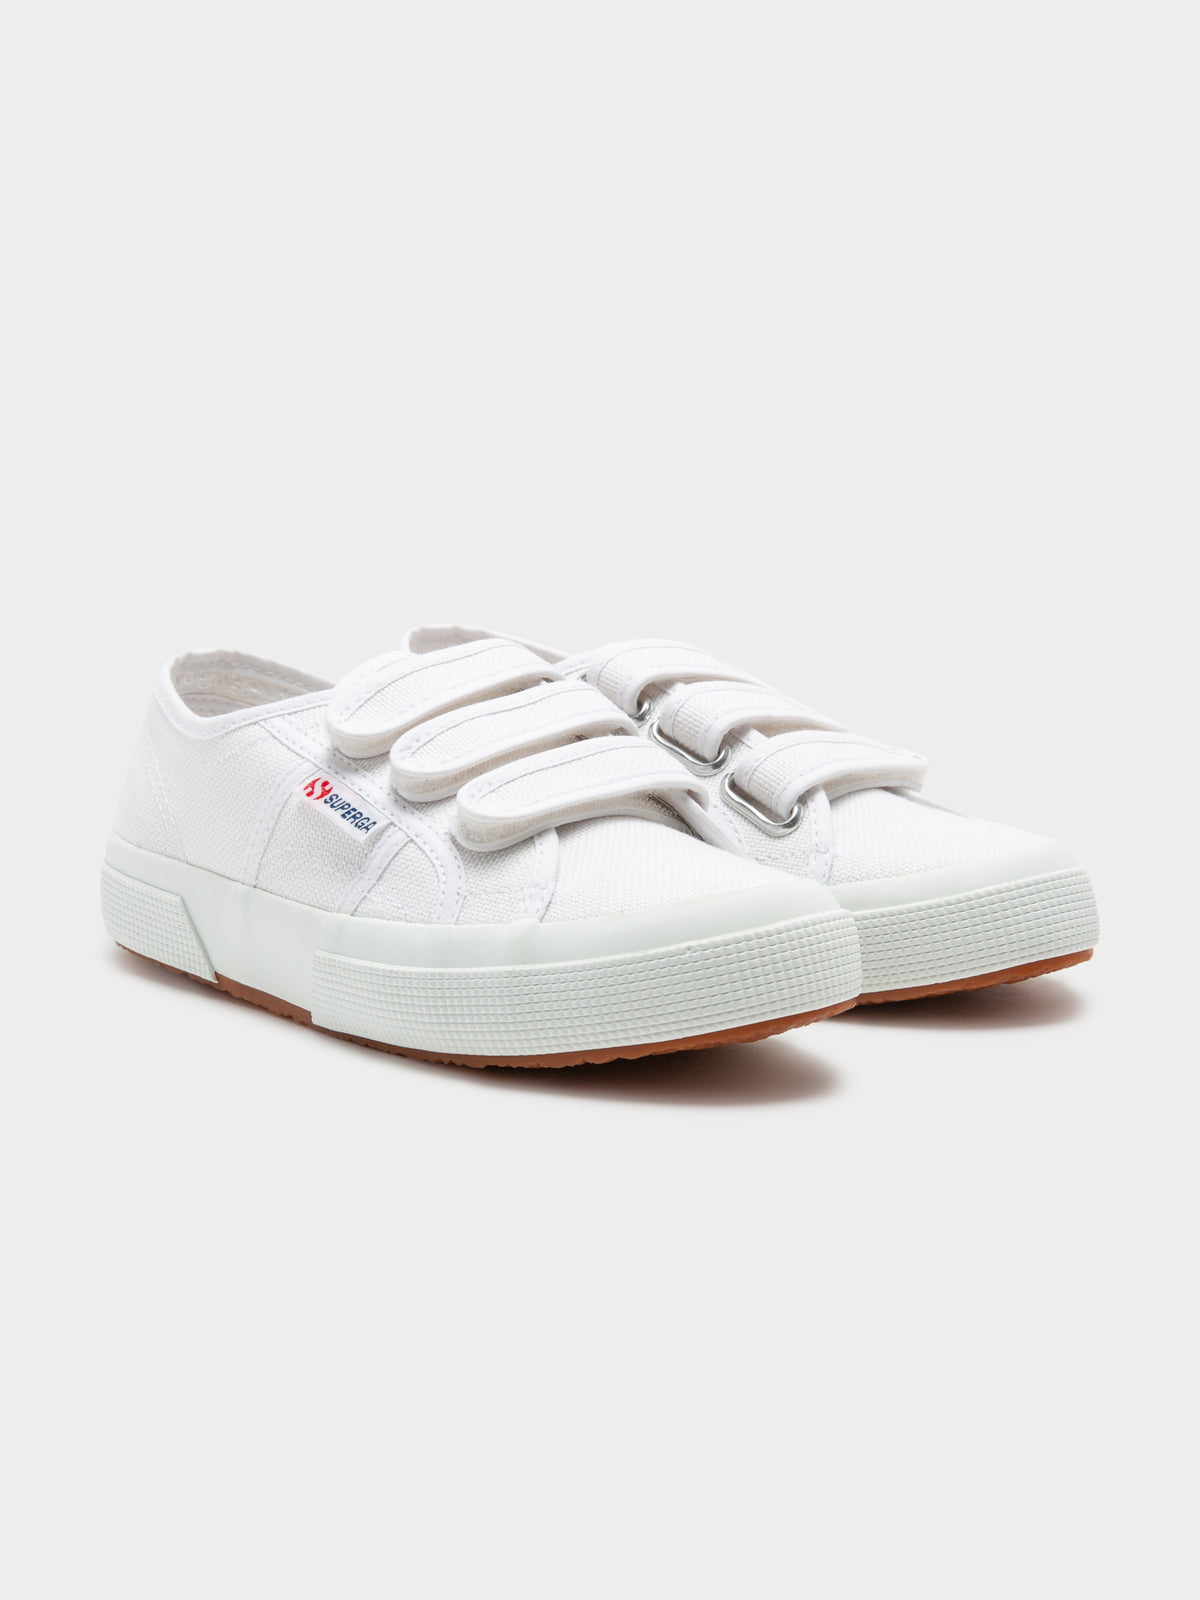 Unisex 2750 Classic Velcro Common Shoes in White